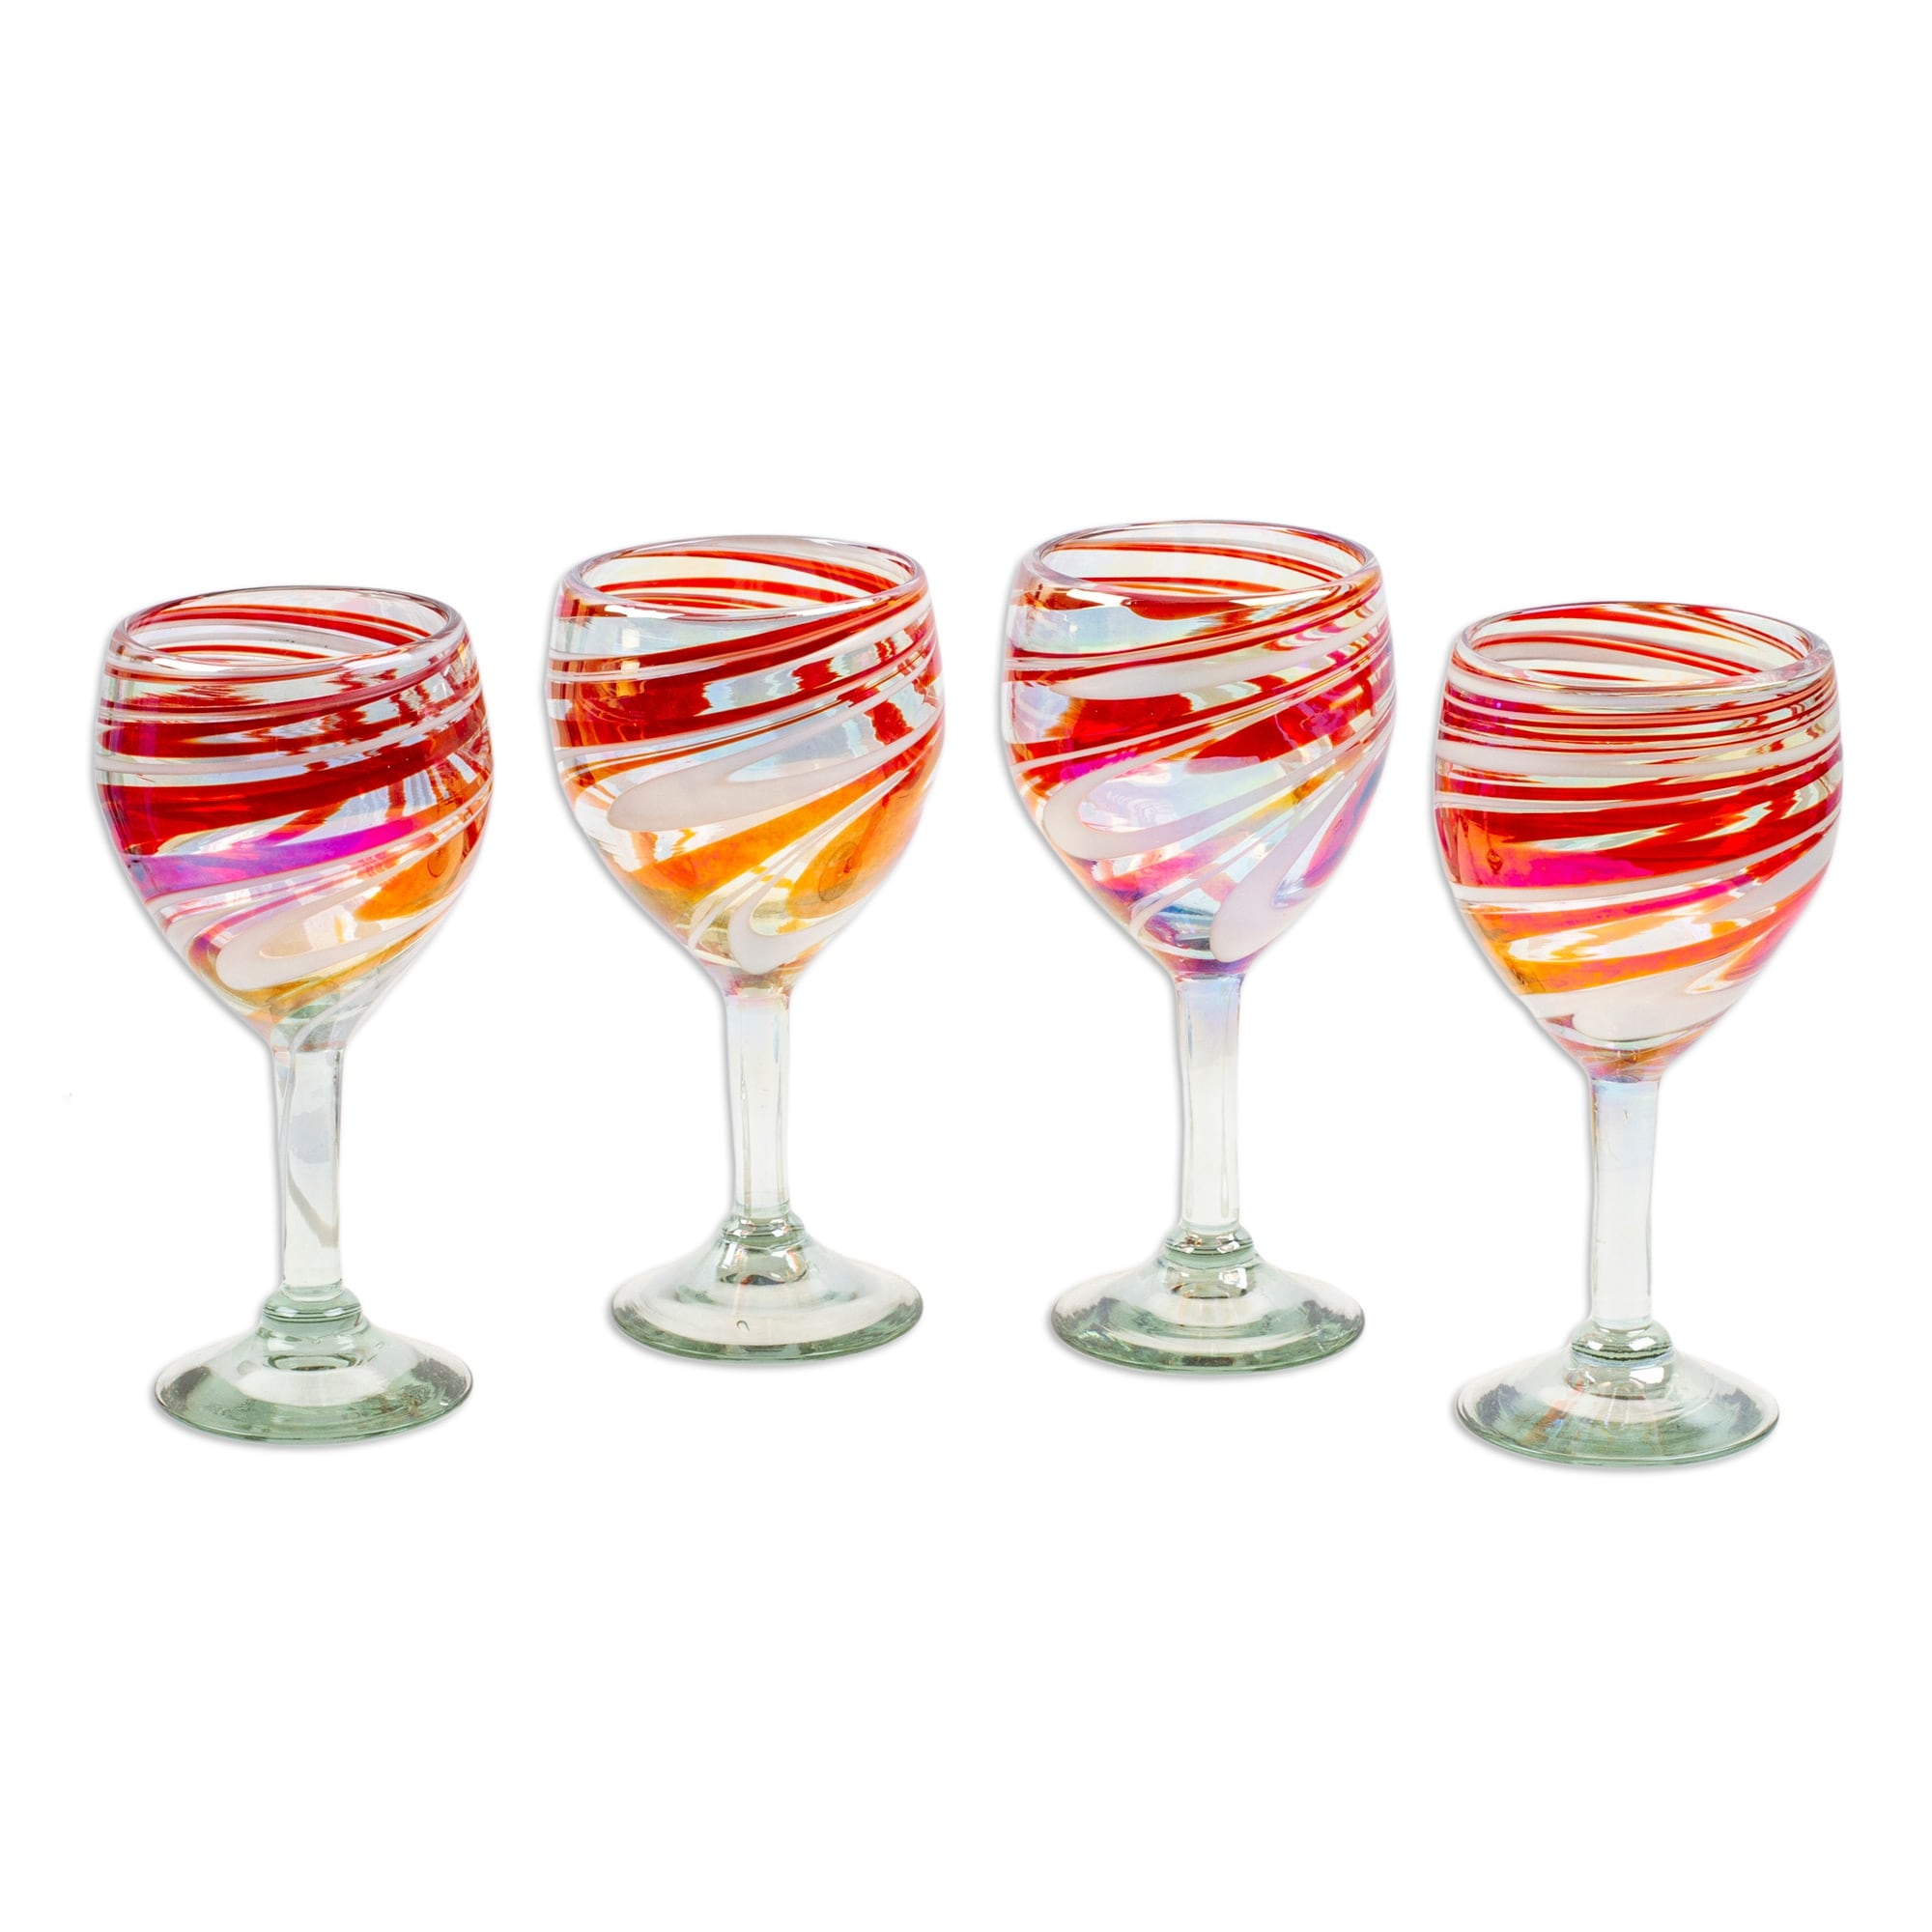 Handblown Stemless Wine Glass, Fair Trade, Handmade stemware